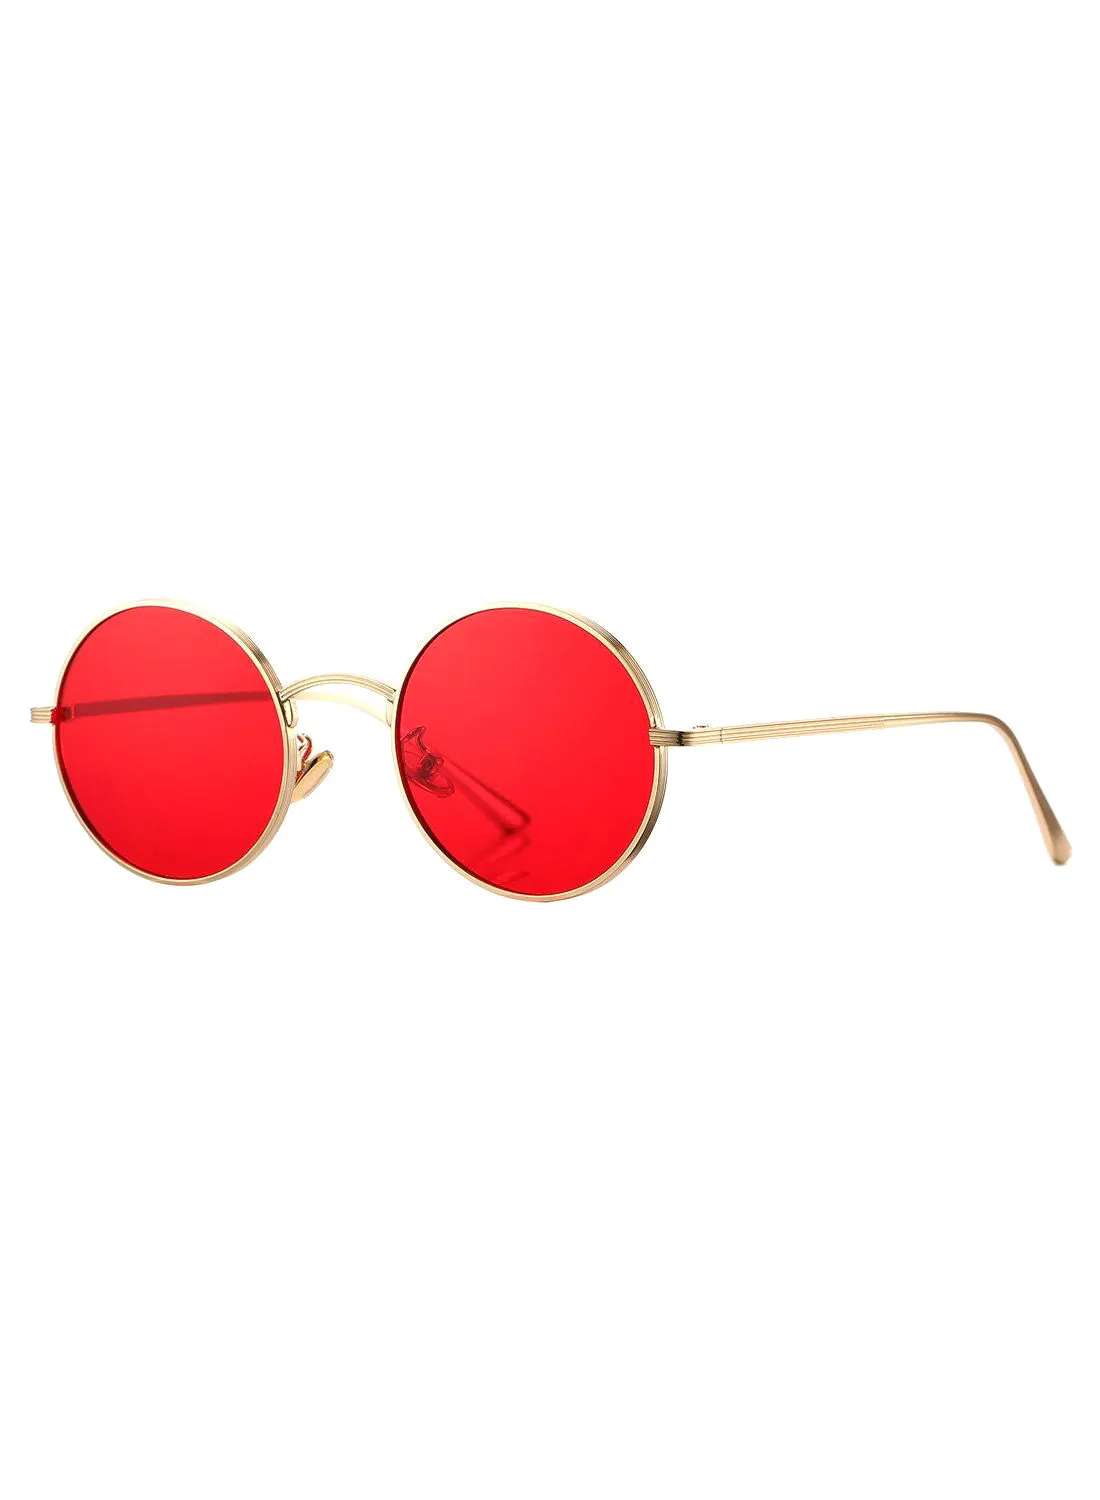 Generic Vintage Round Sunglasses - Lens Size: 51 mm